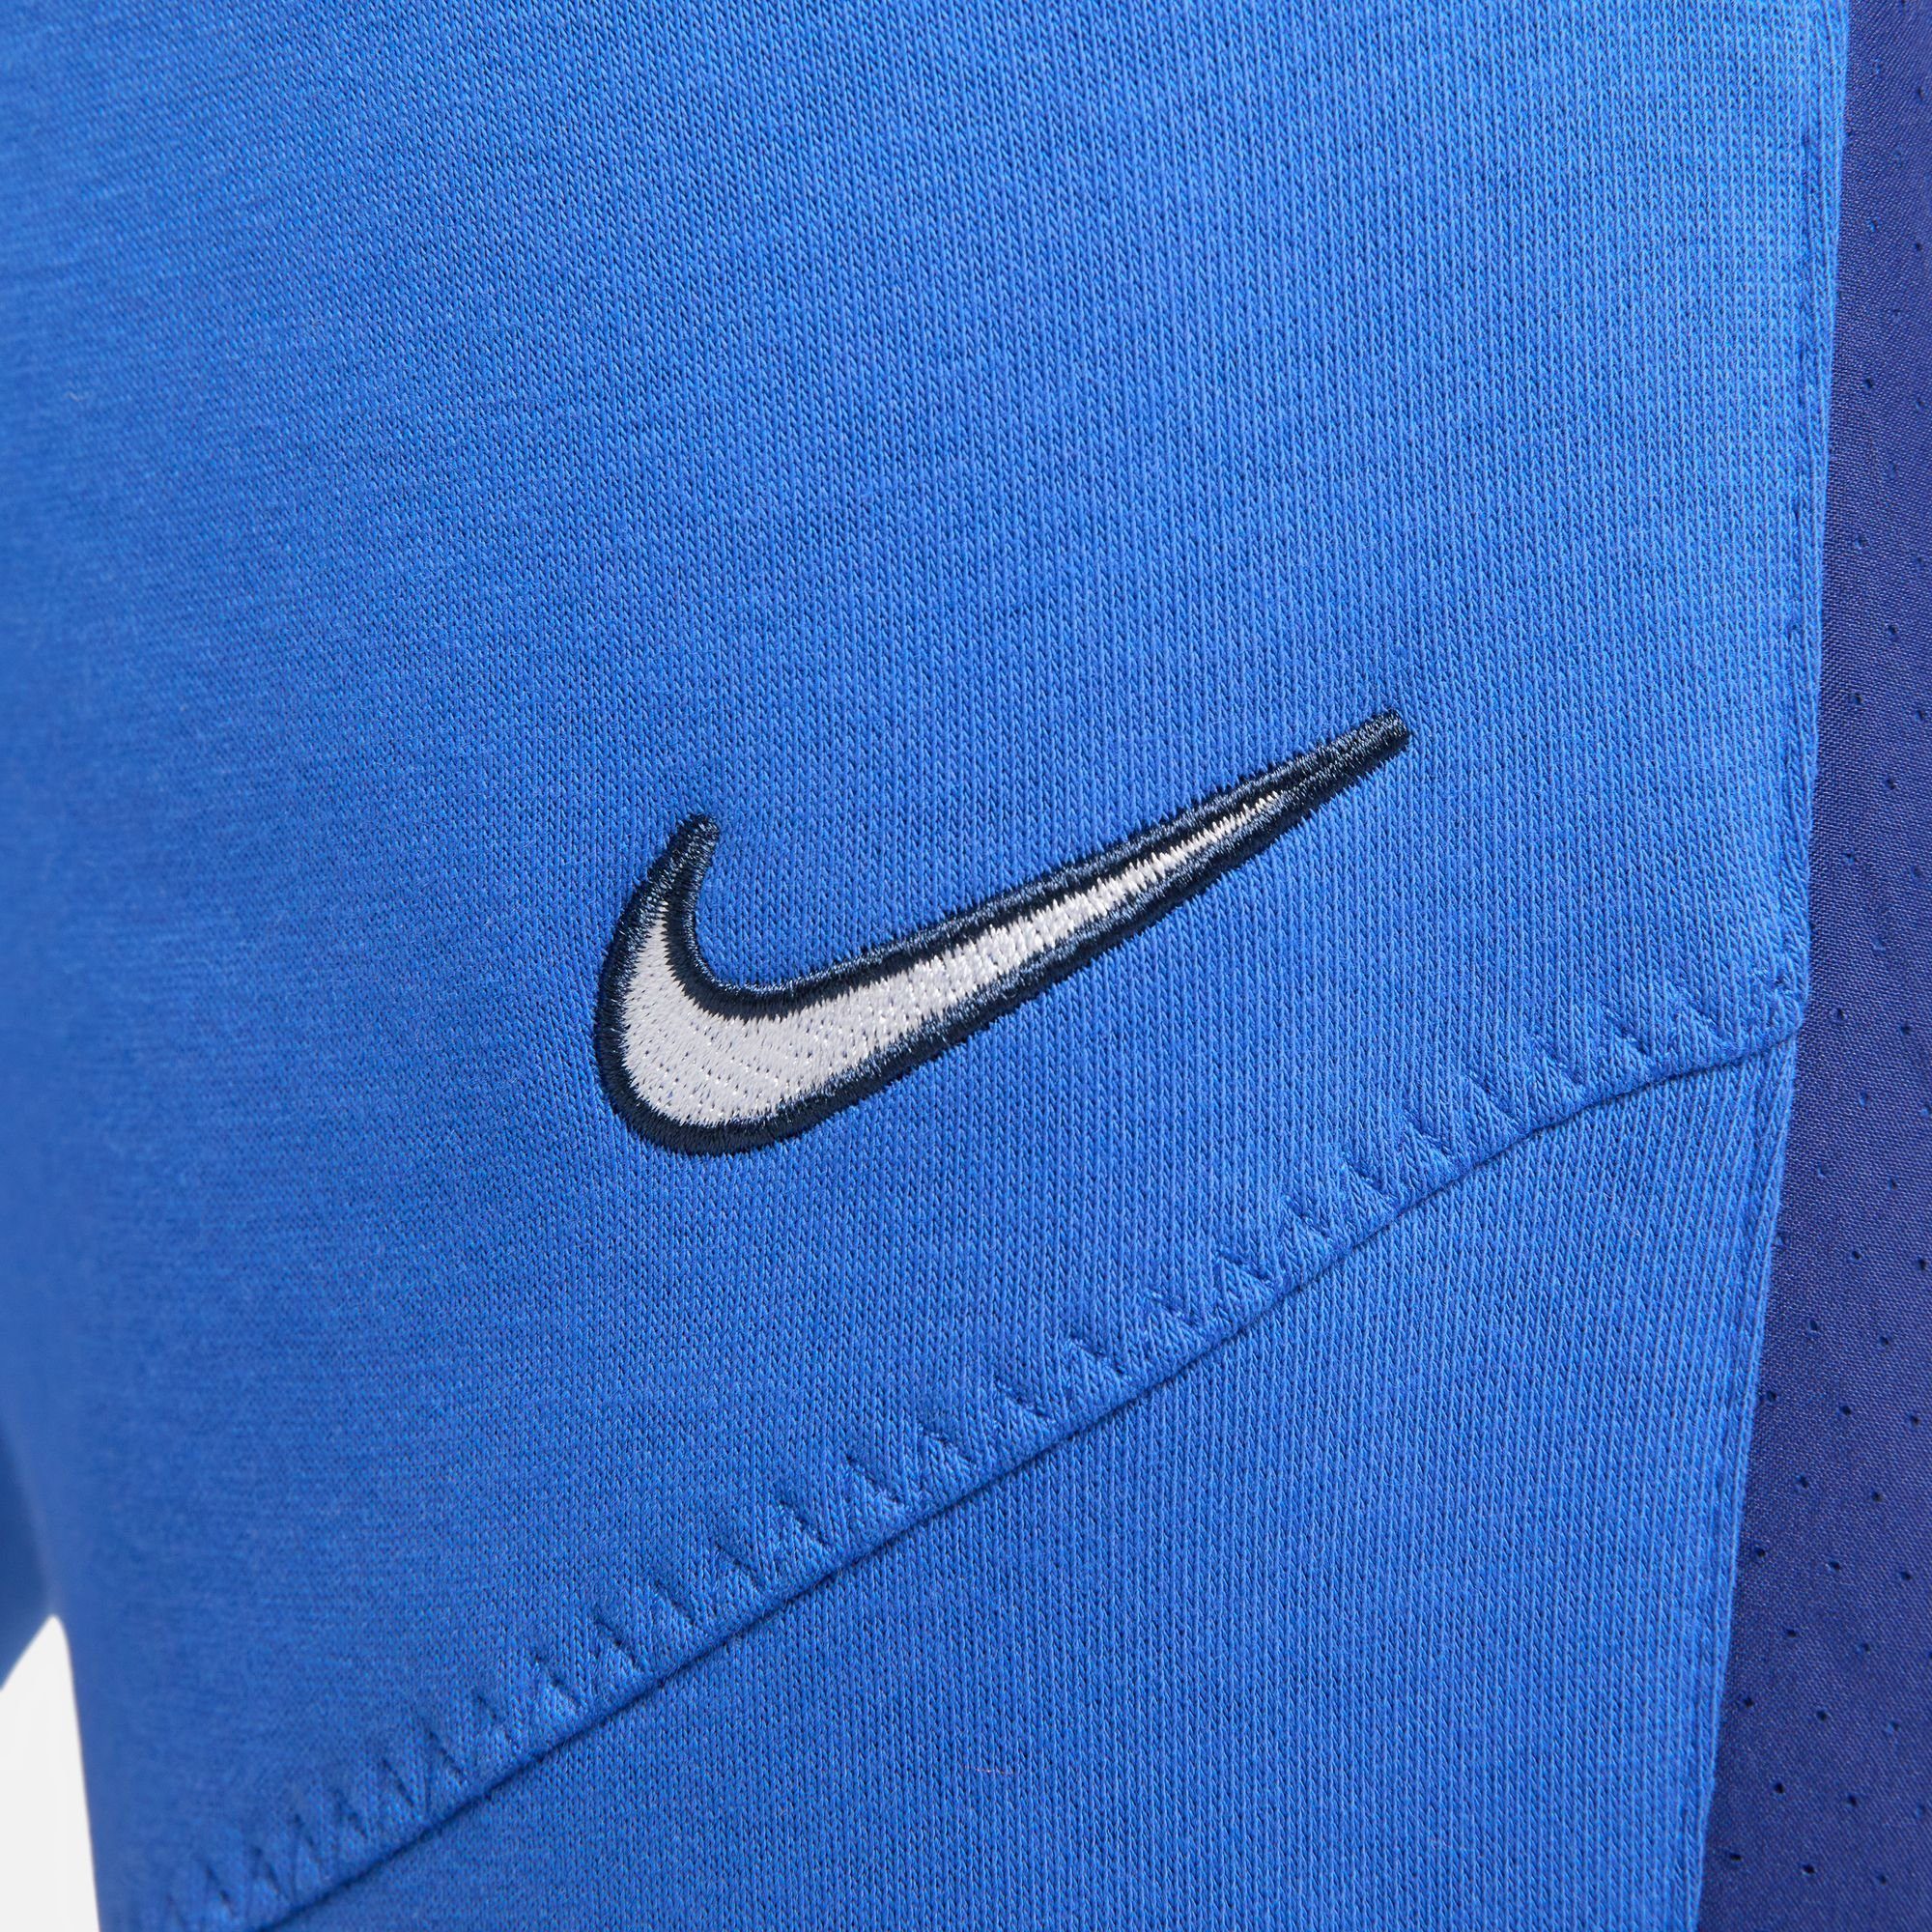 SP GAME Sportswear NSW BB ROYAL M Nike Jogginghose JOGGER BLUE FLC ROYAL/DEEP